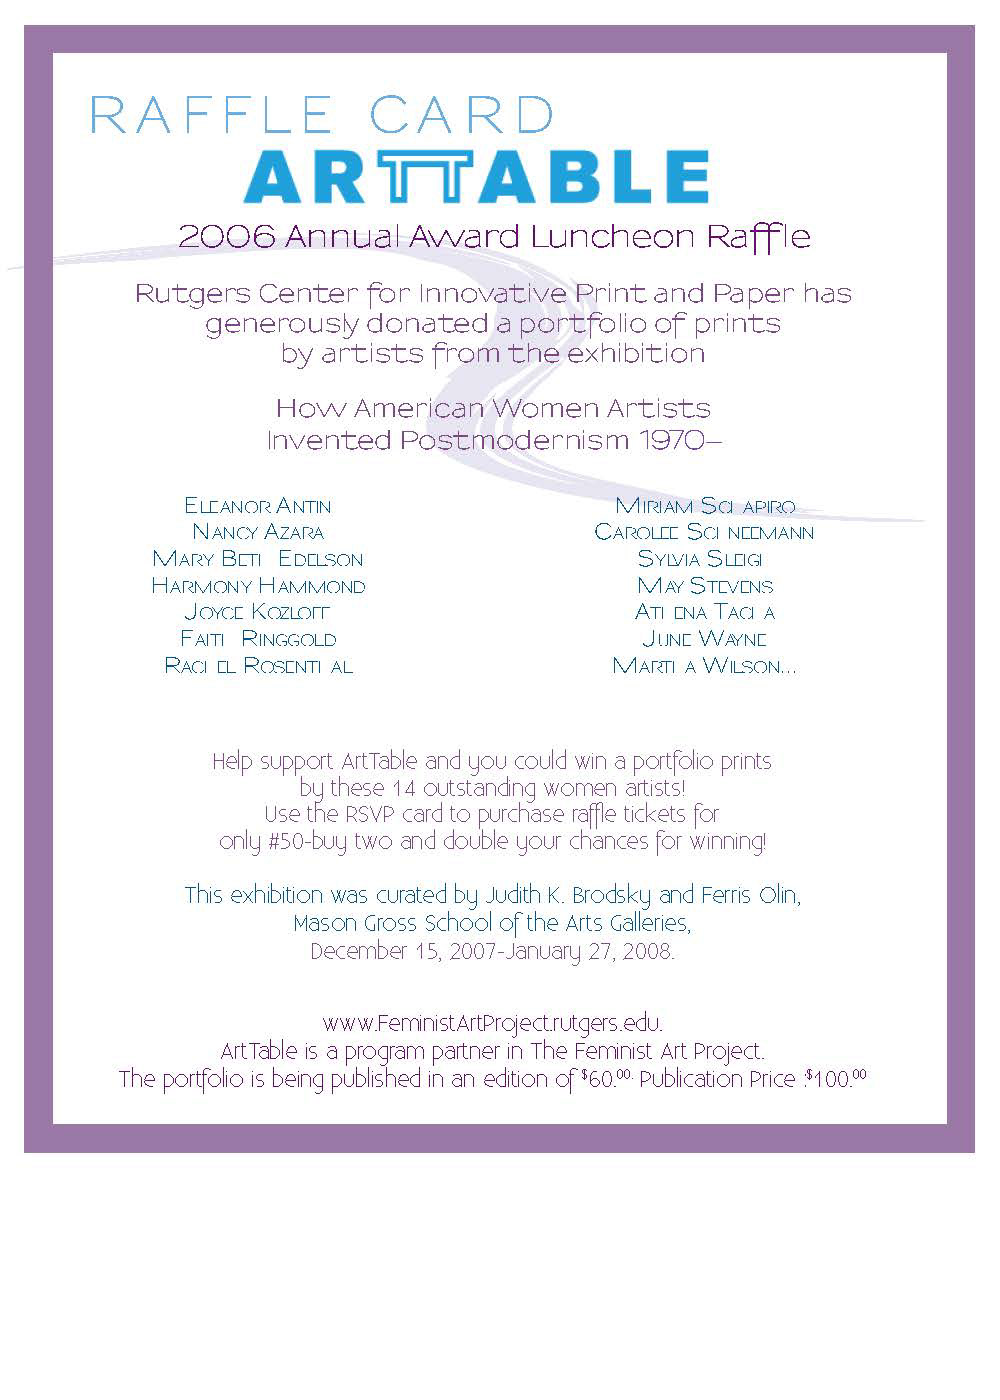 Invitation envelopes rsvp art table Martha Lynn Laskie blue purple